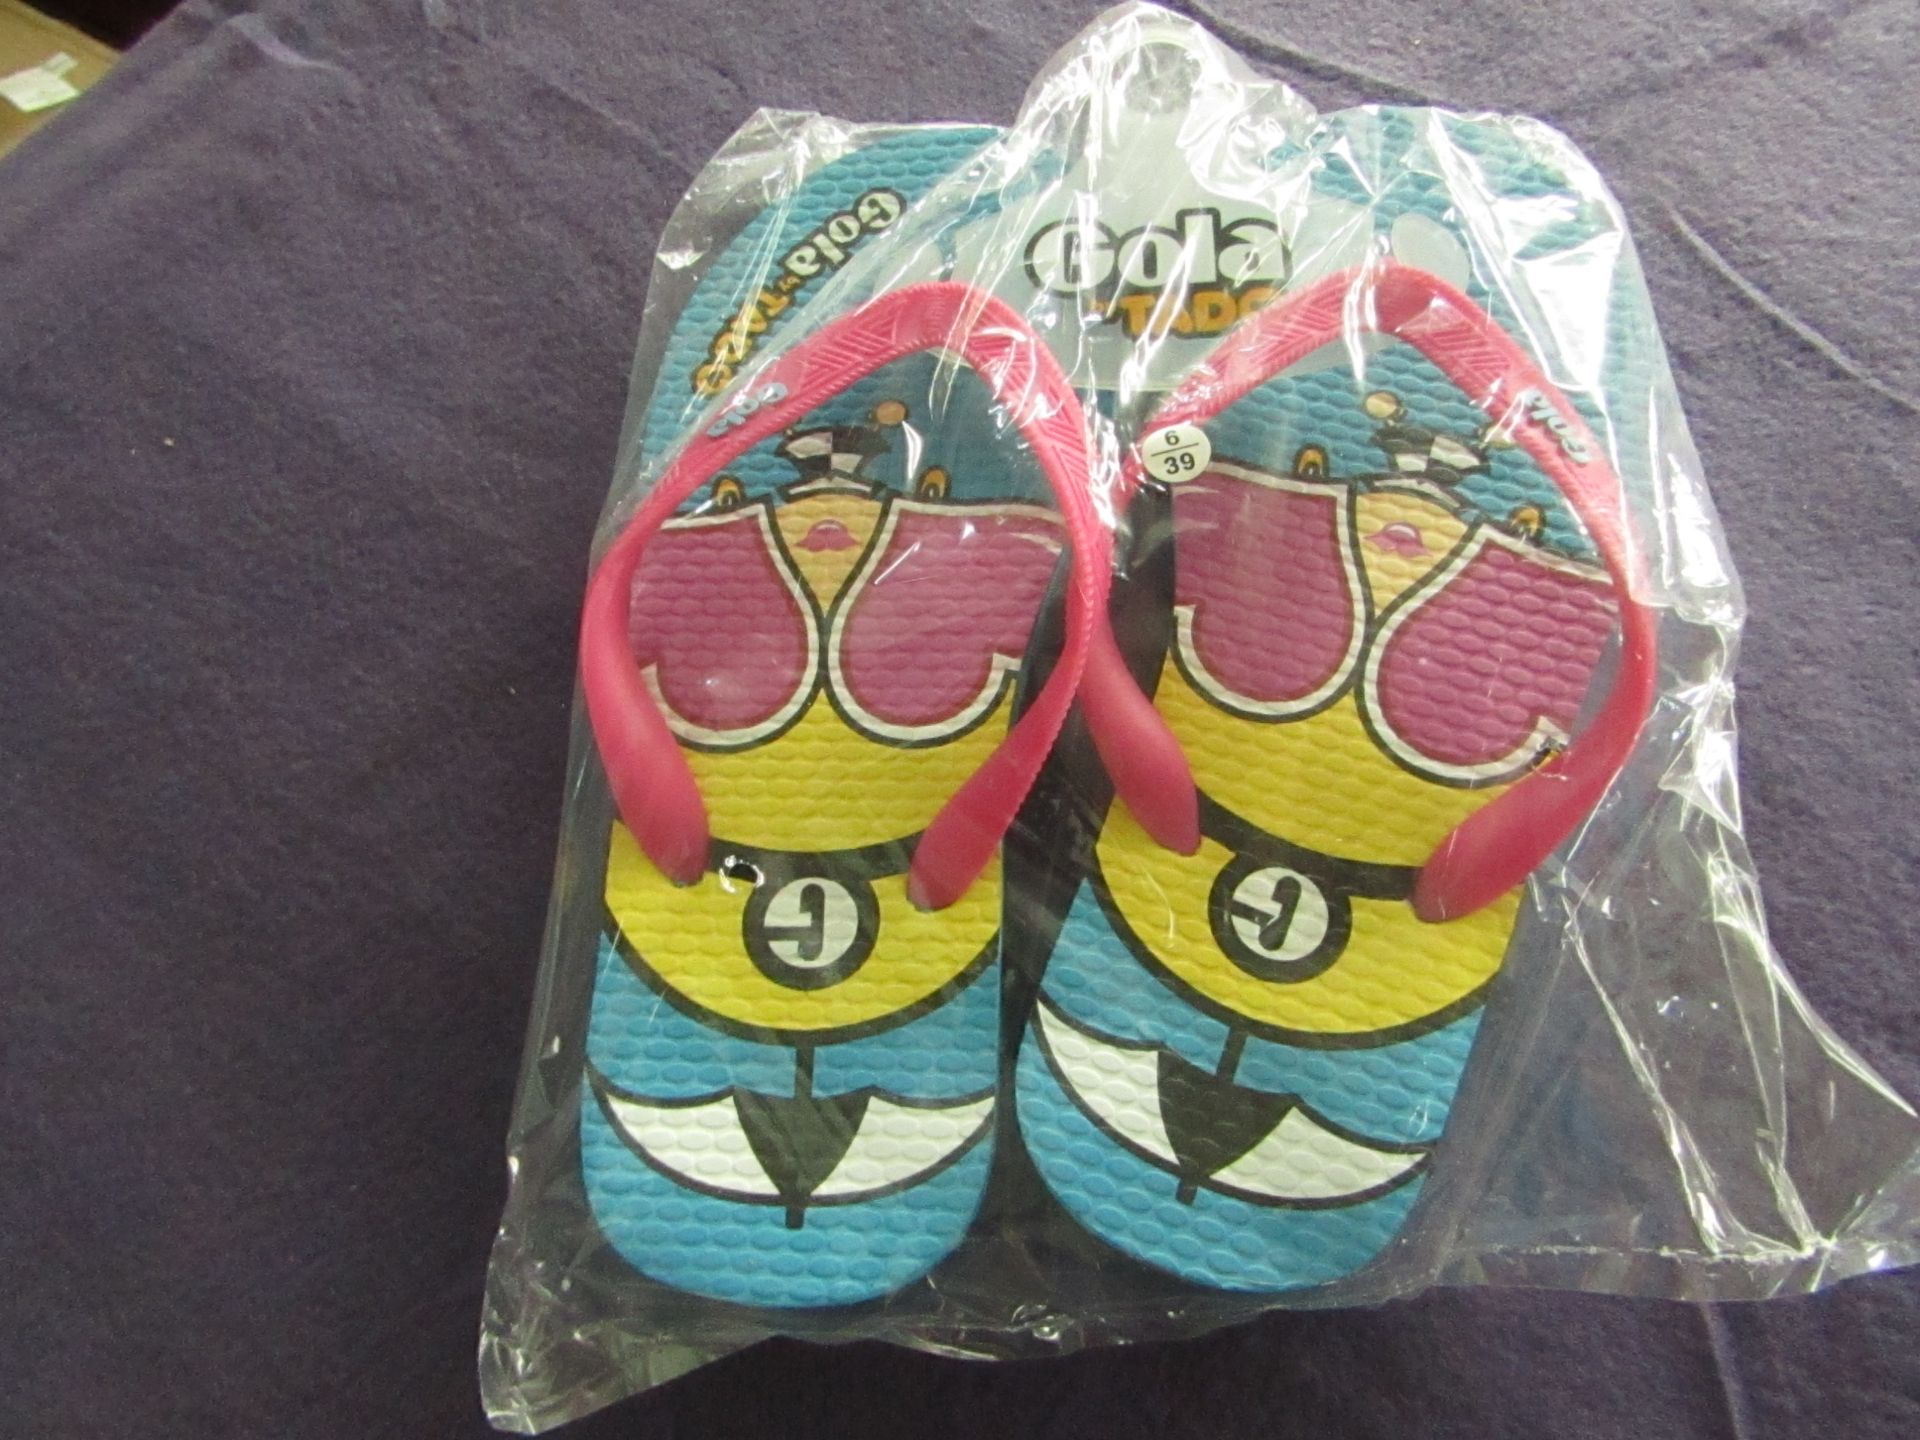 2x Gola - Tado Foam Slippers ( Girls ) - Size 6 - All Unused & Packaged.